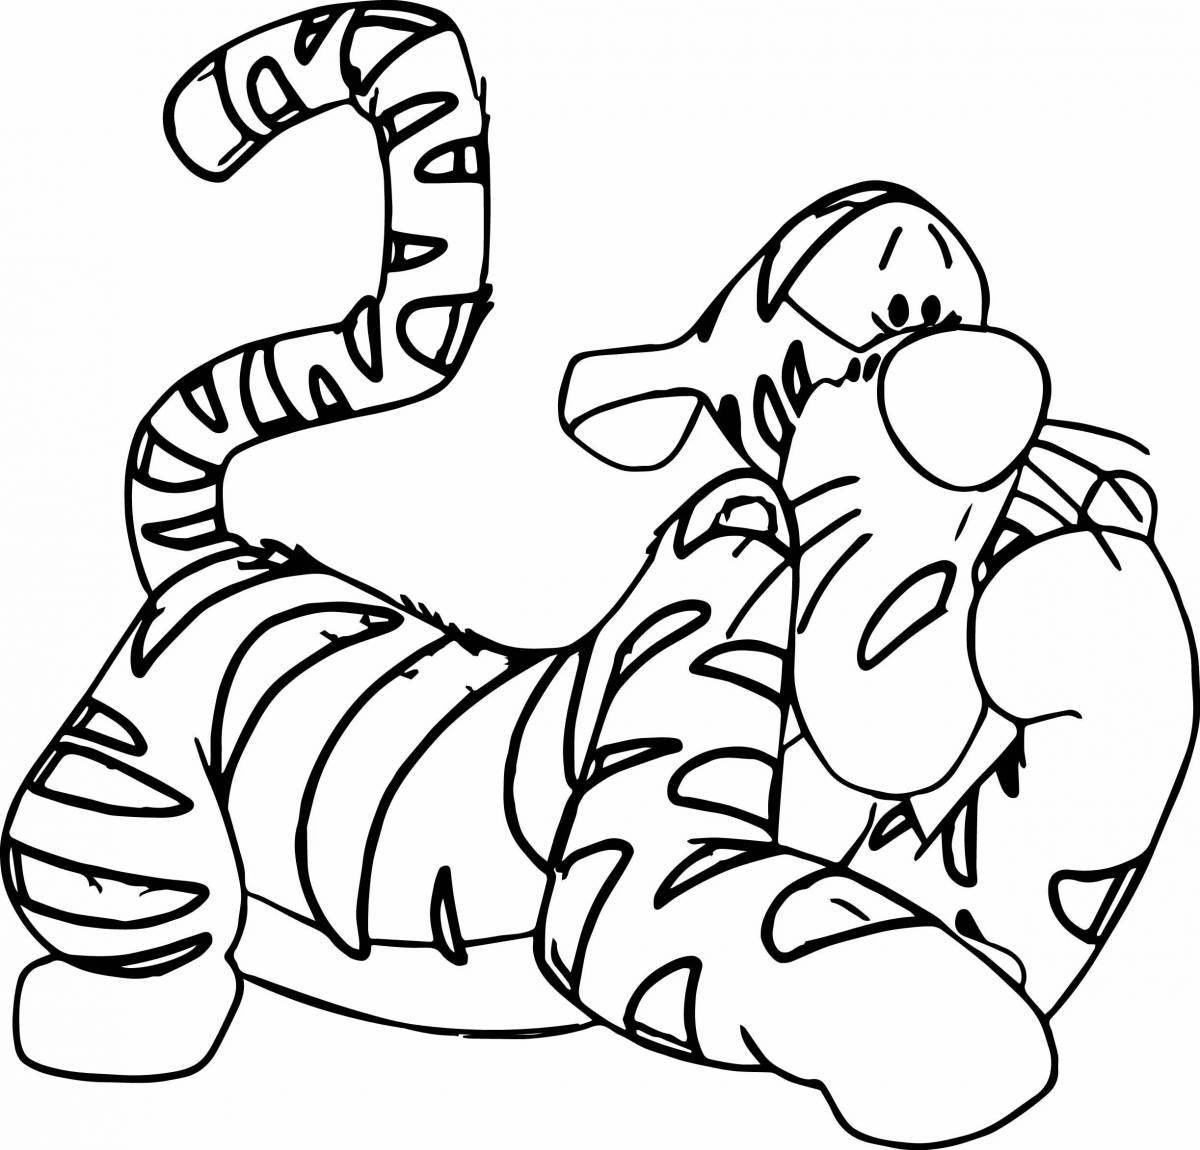 Coloring page playful tigress